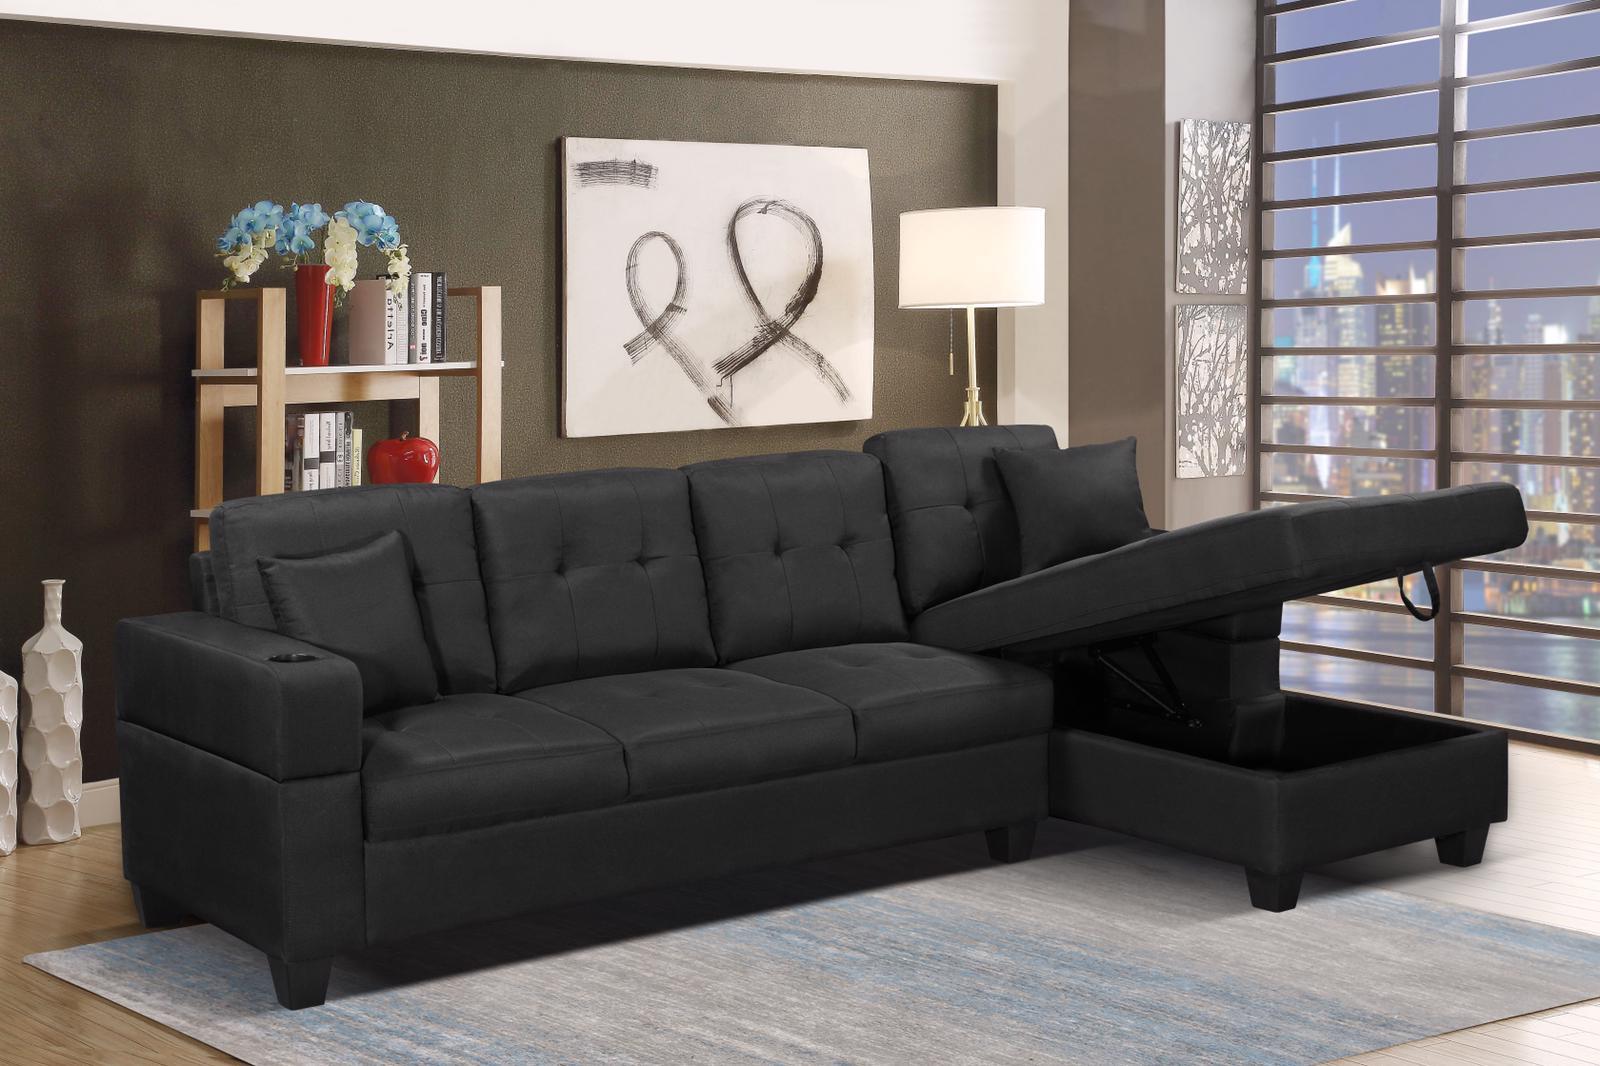 Black Rhf Fabric Sectional Sofa